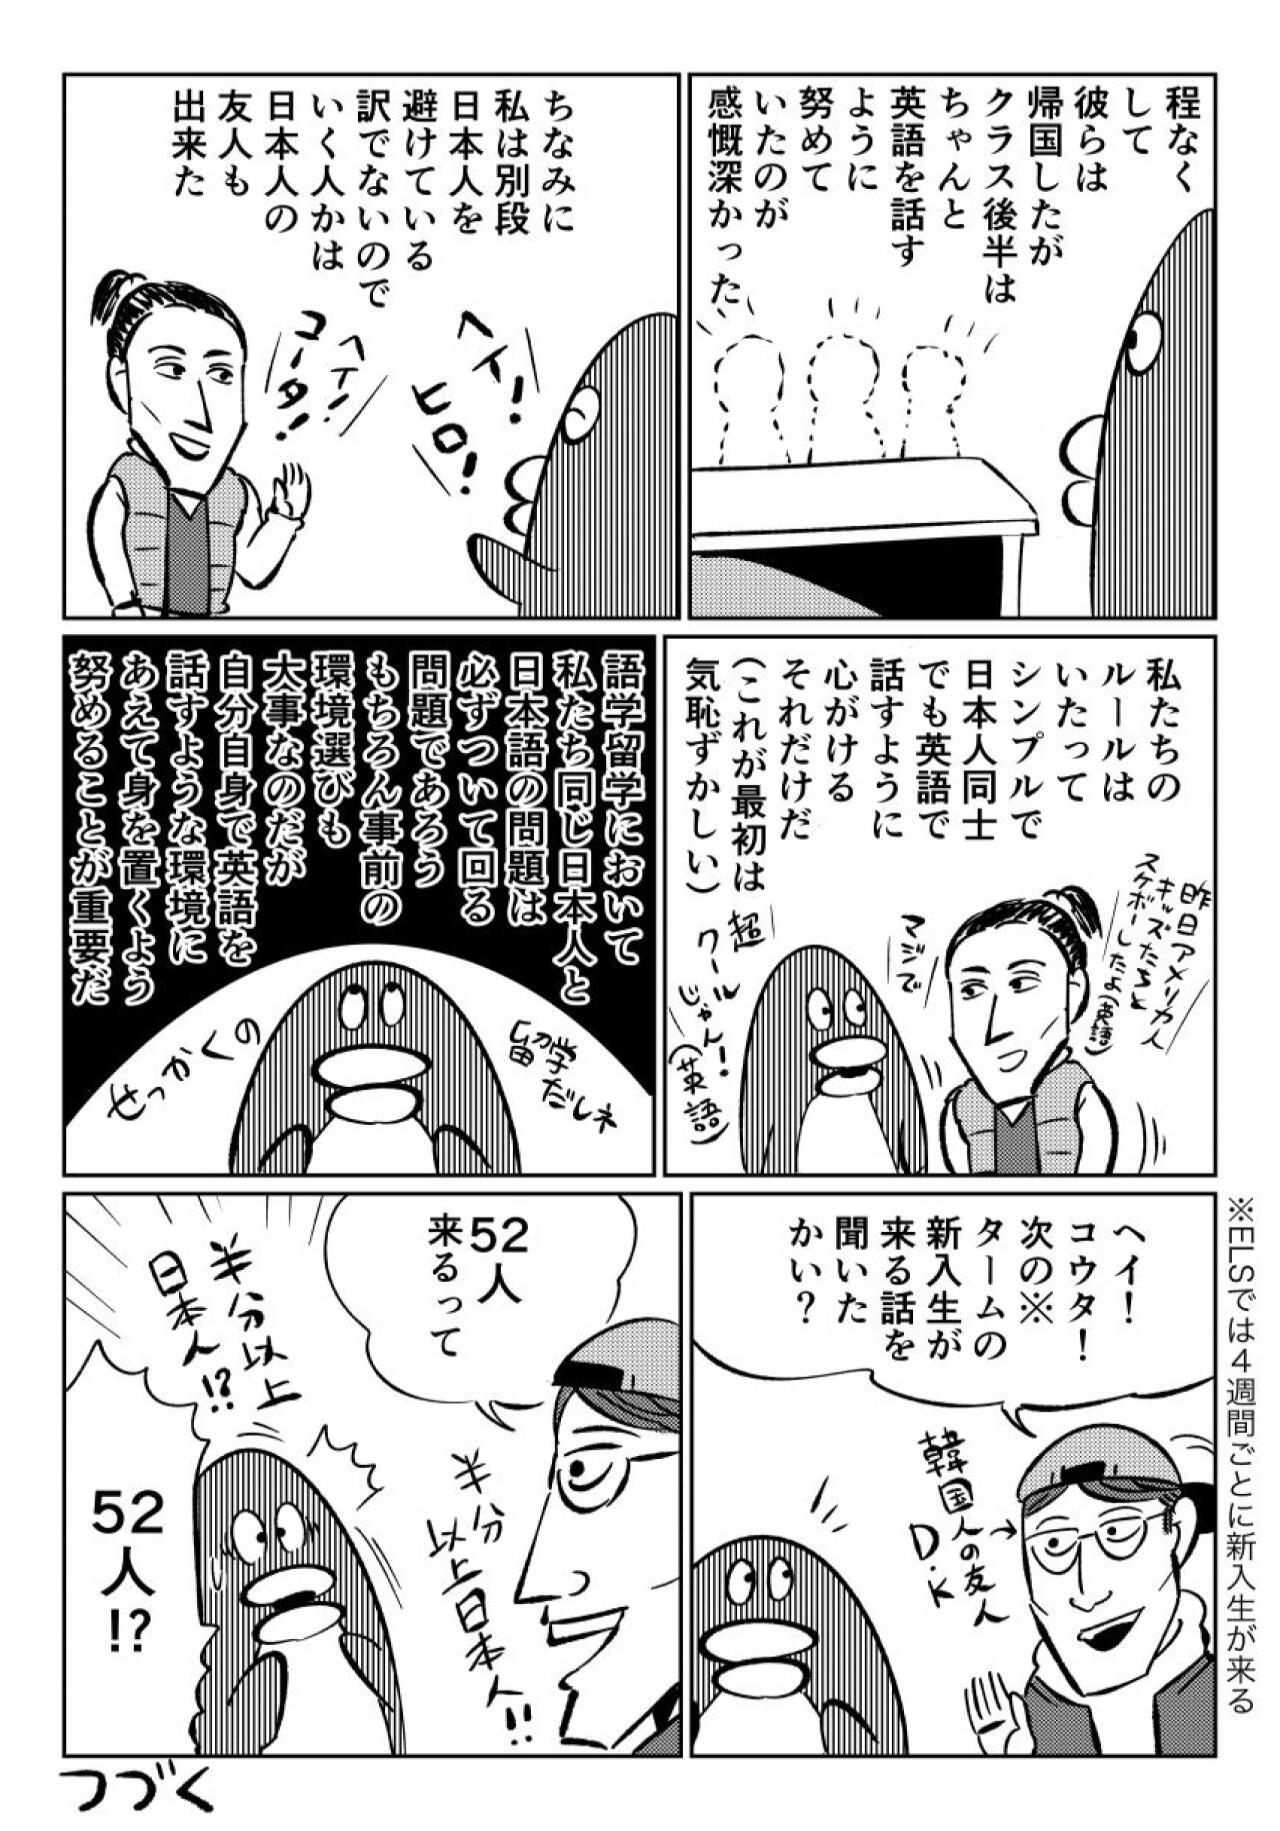 https://www.ryugaku.co.jp/column/images/34sai6_4_1280.jpg